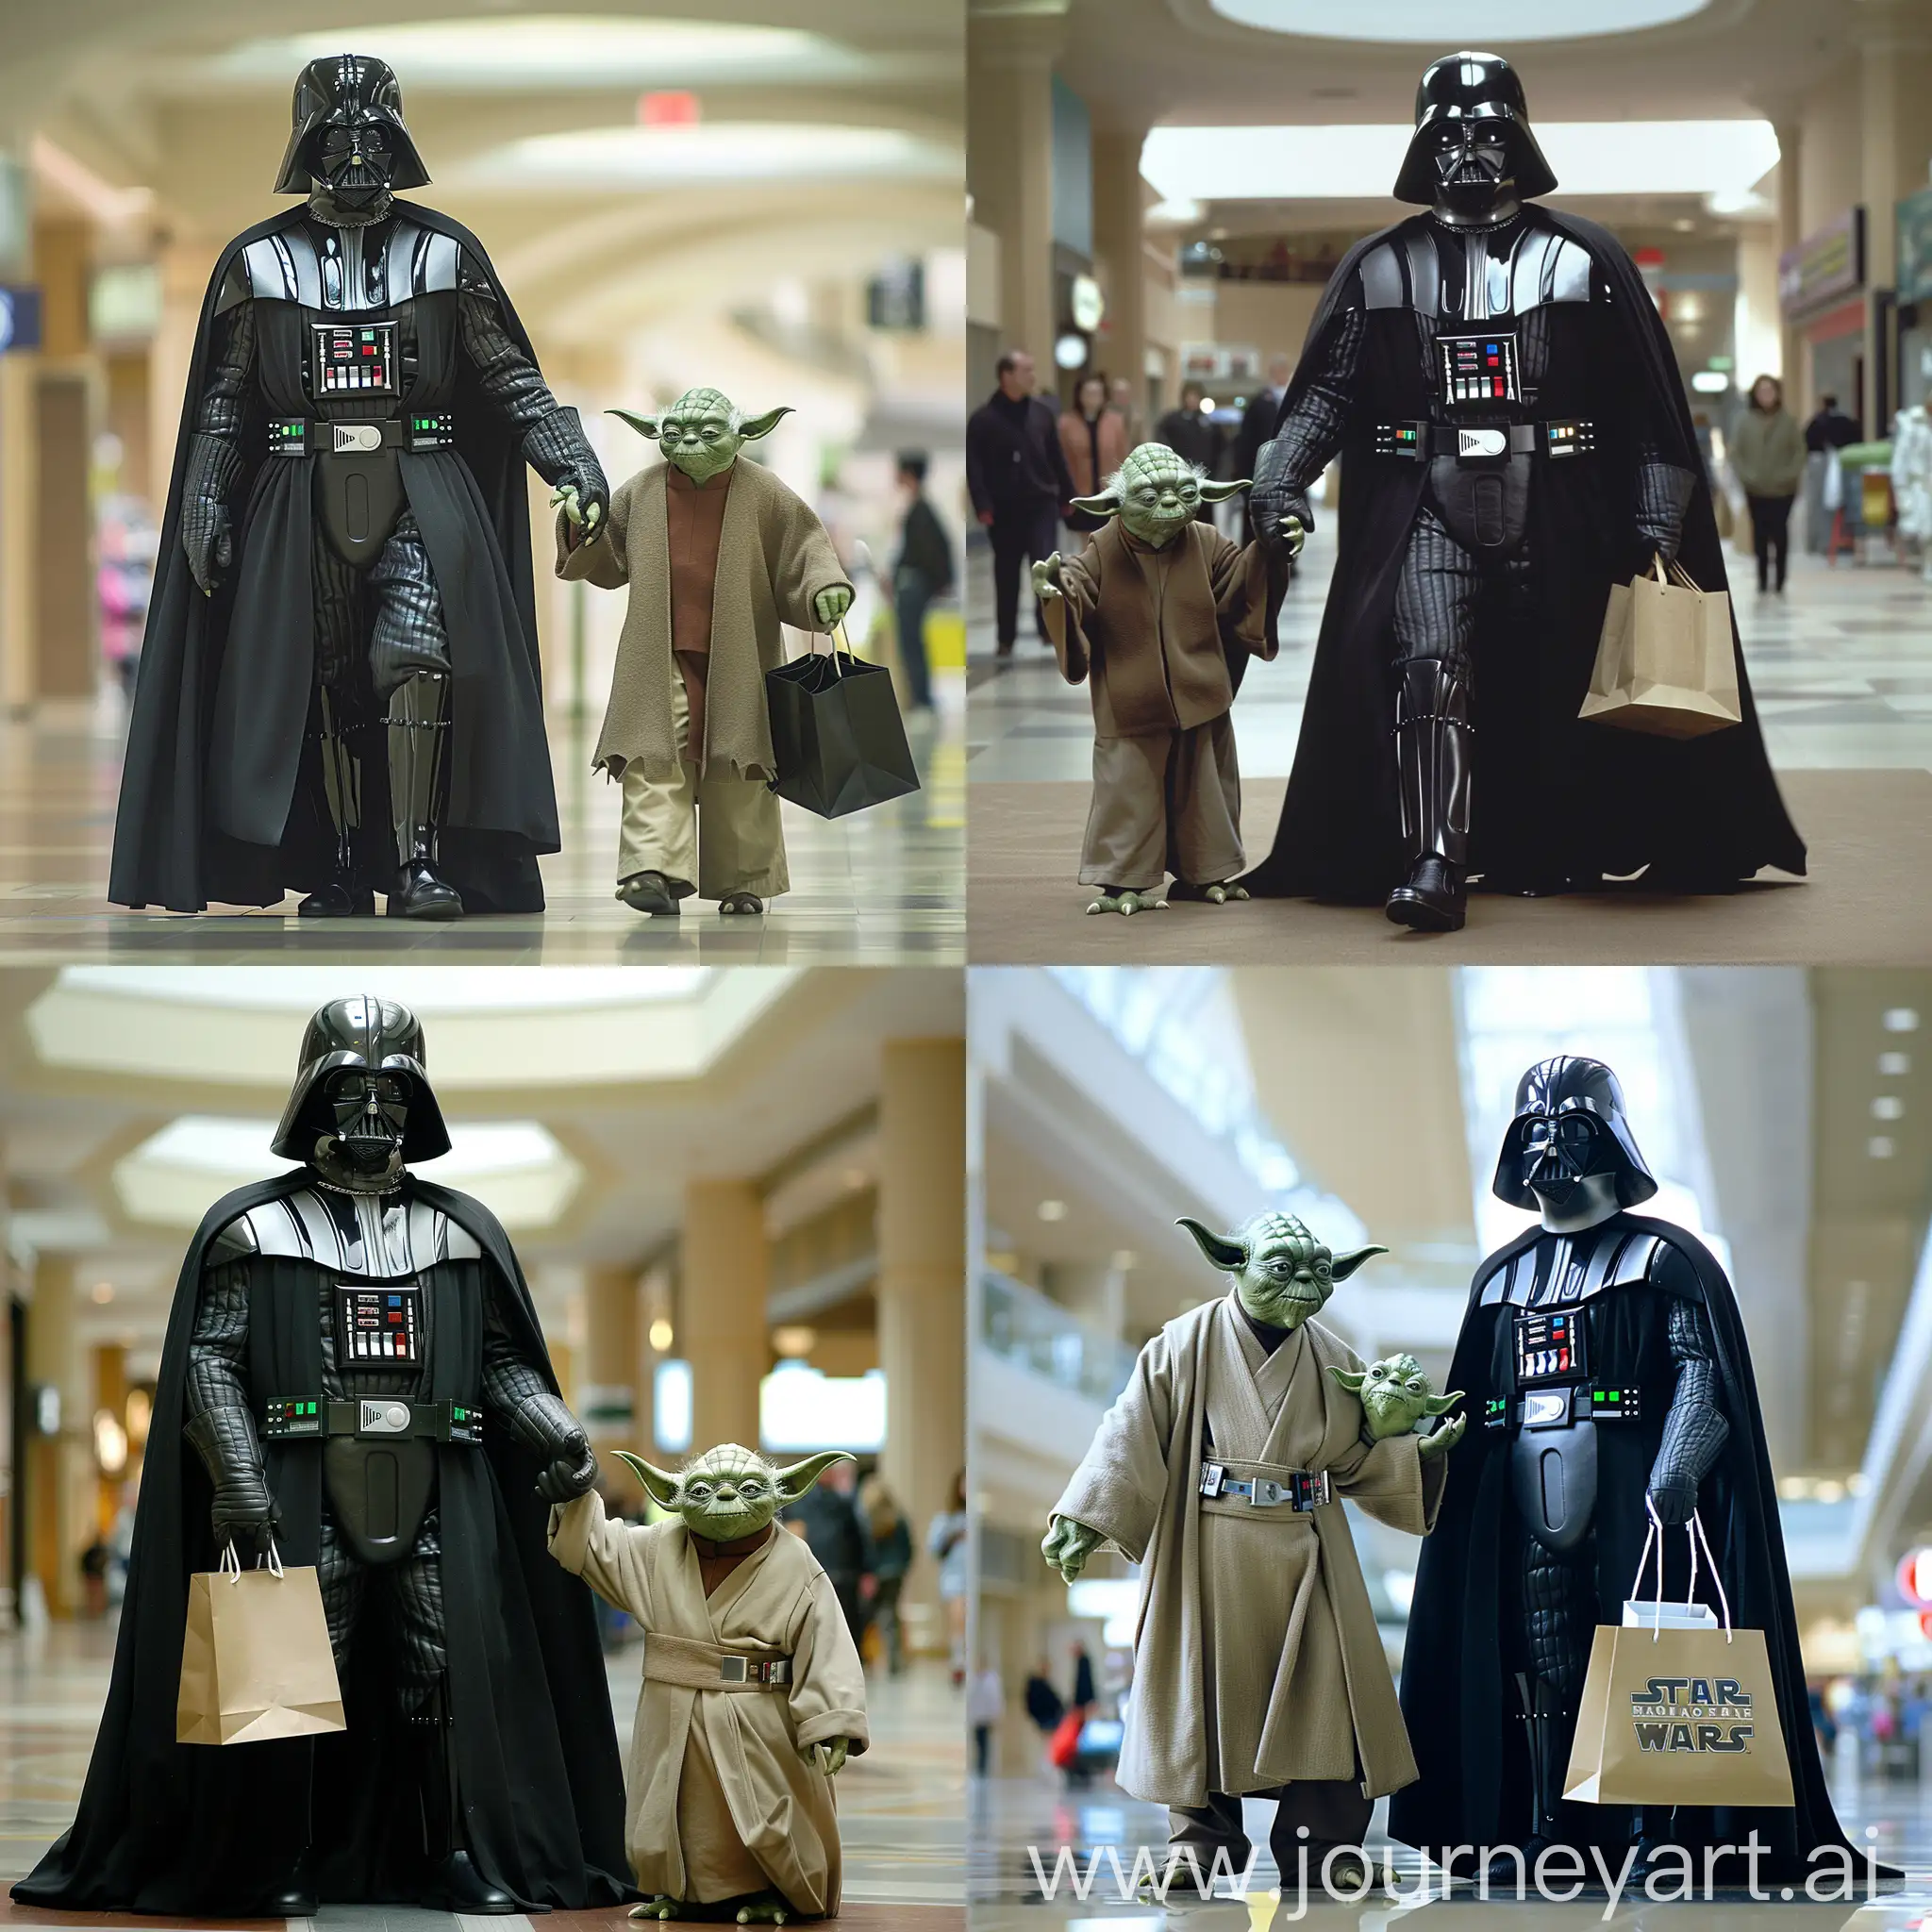 Darth-Vader-and-Yoda-Shopping-Together-Intergalactic-Duo-Hits-the-Mall